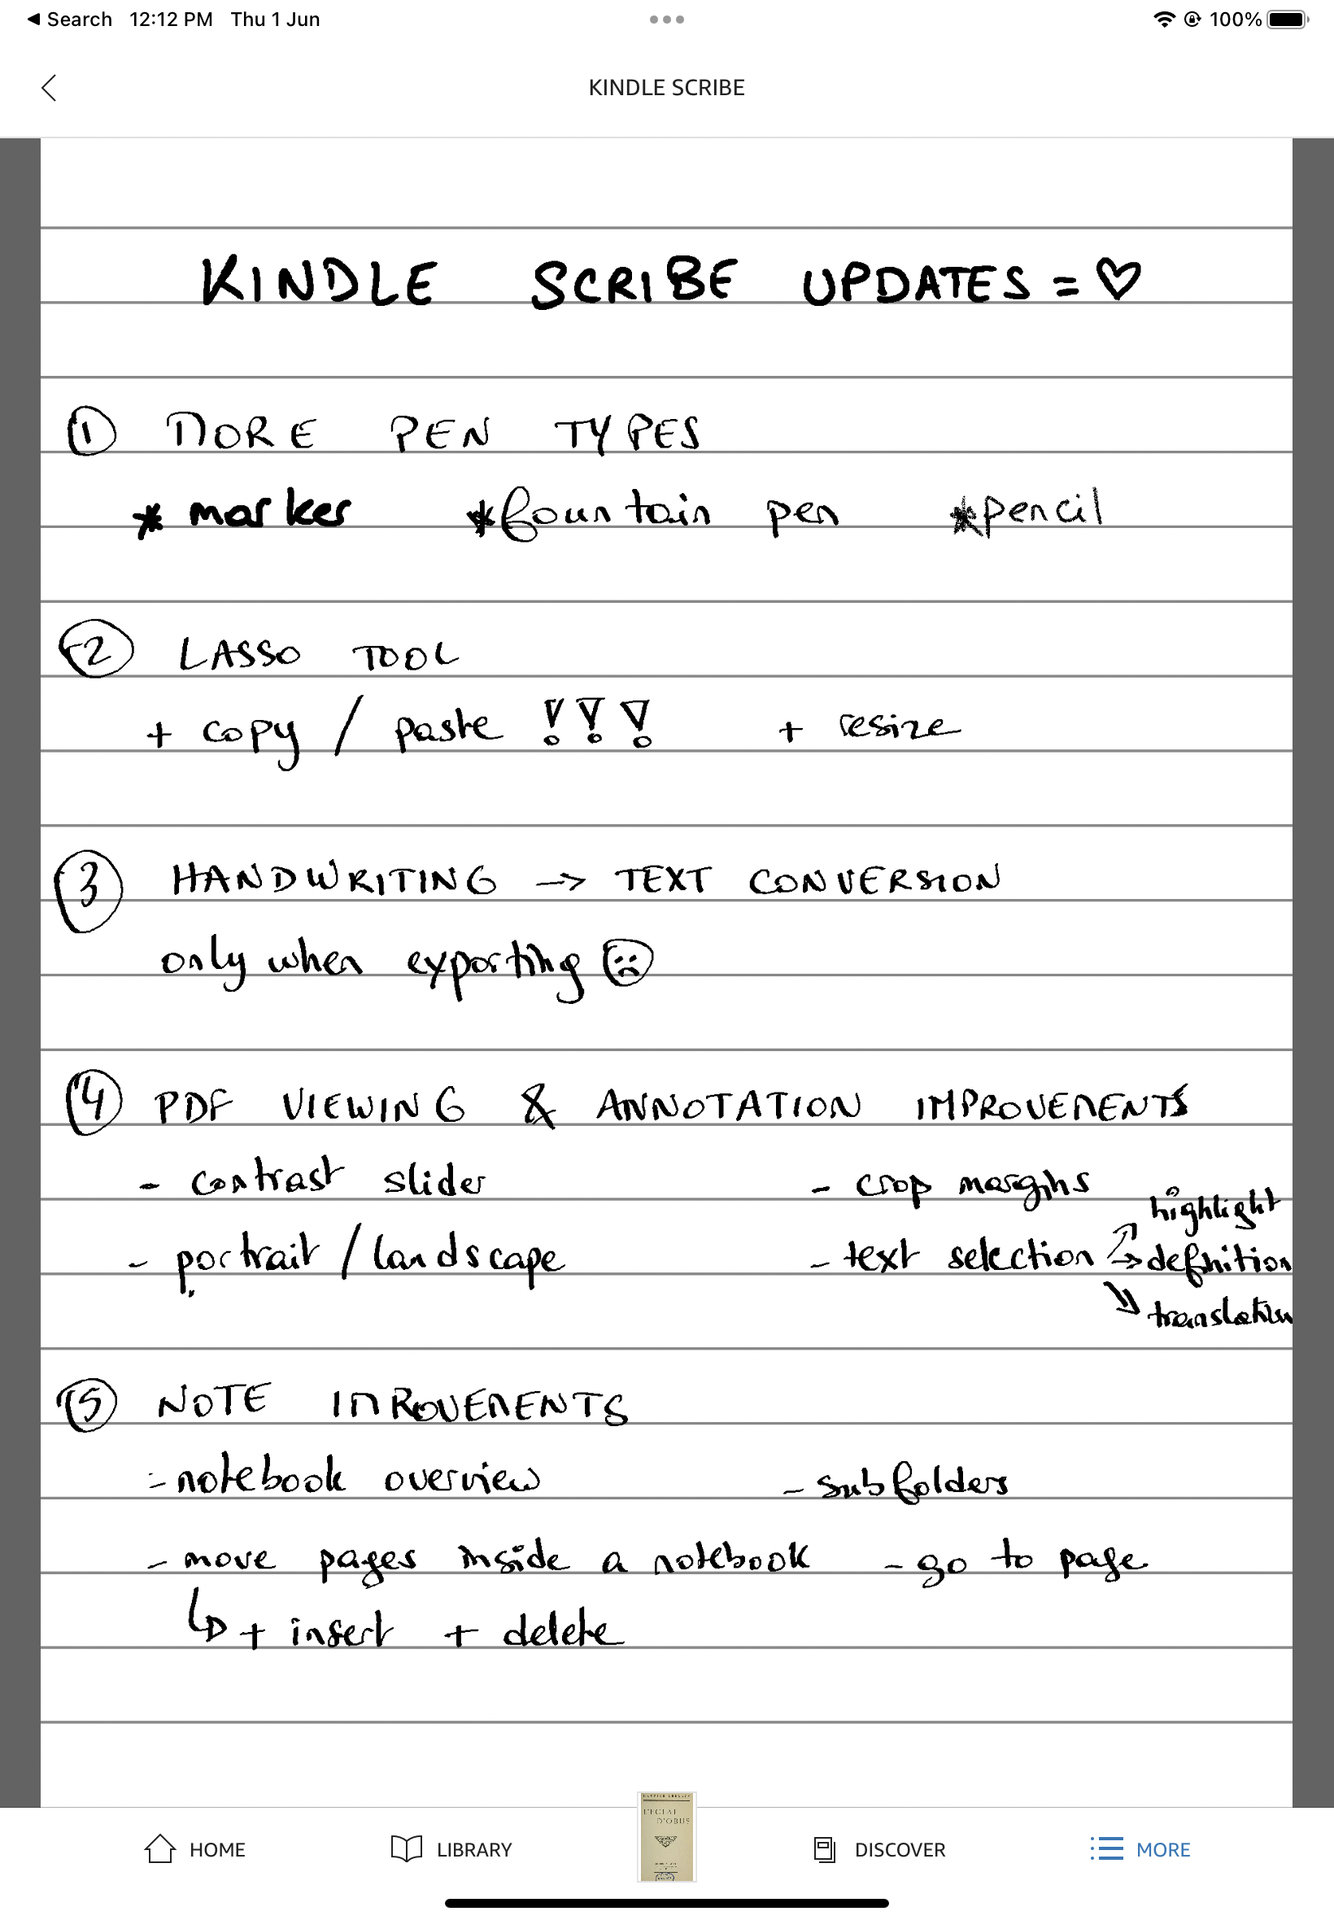 amazon kindle scribe screenshot handwritten note